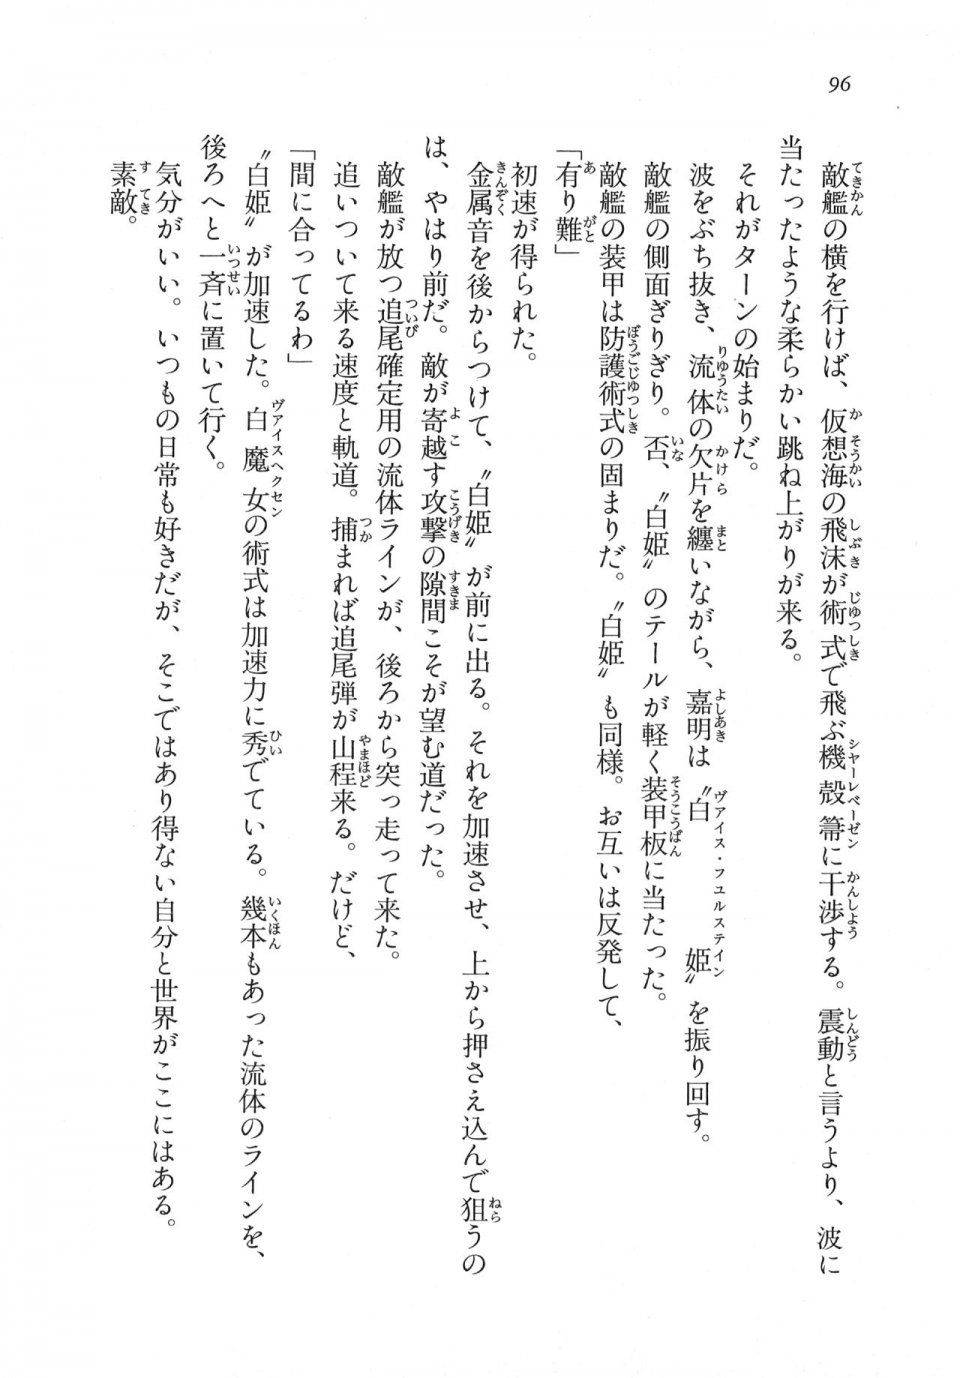 Kyoukai Senjou no Horizon LN Vol 18(7C) Part 1 - Photo #96